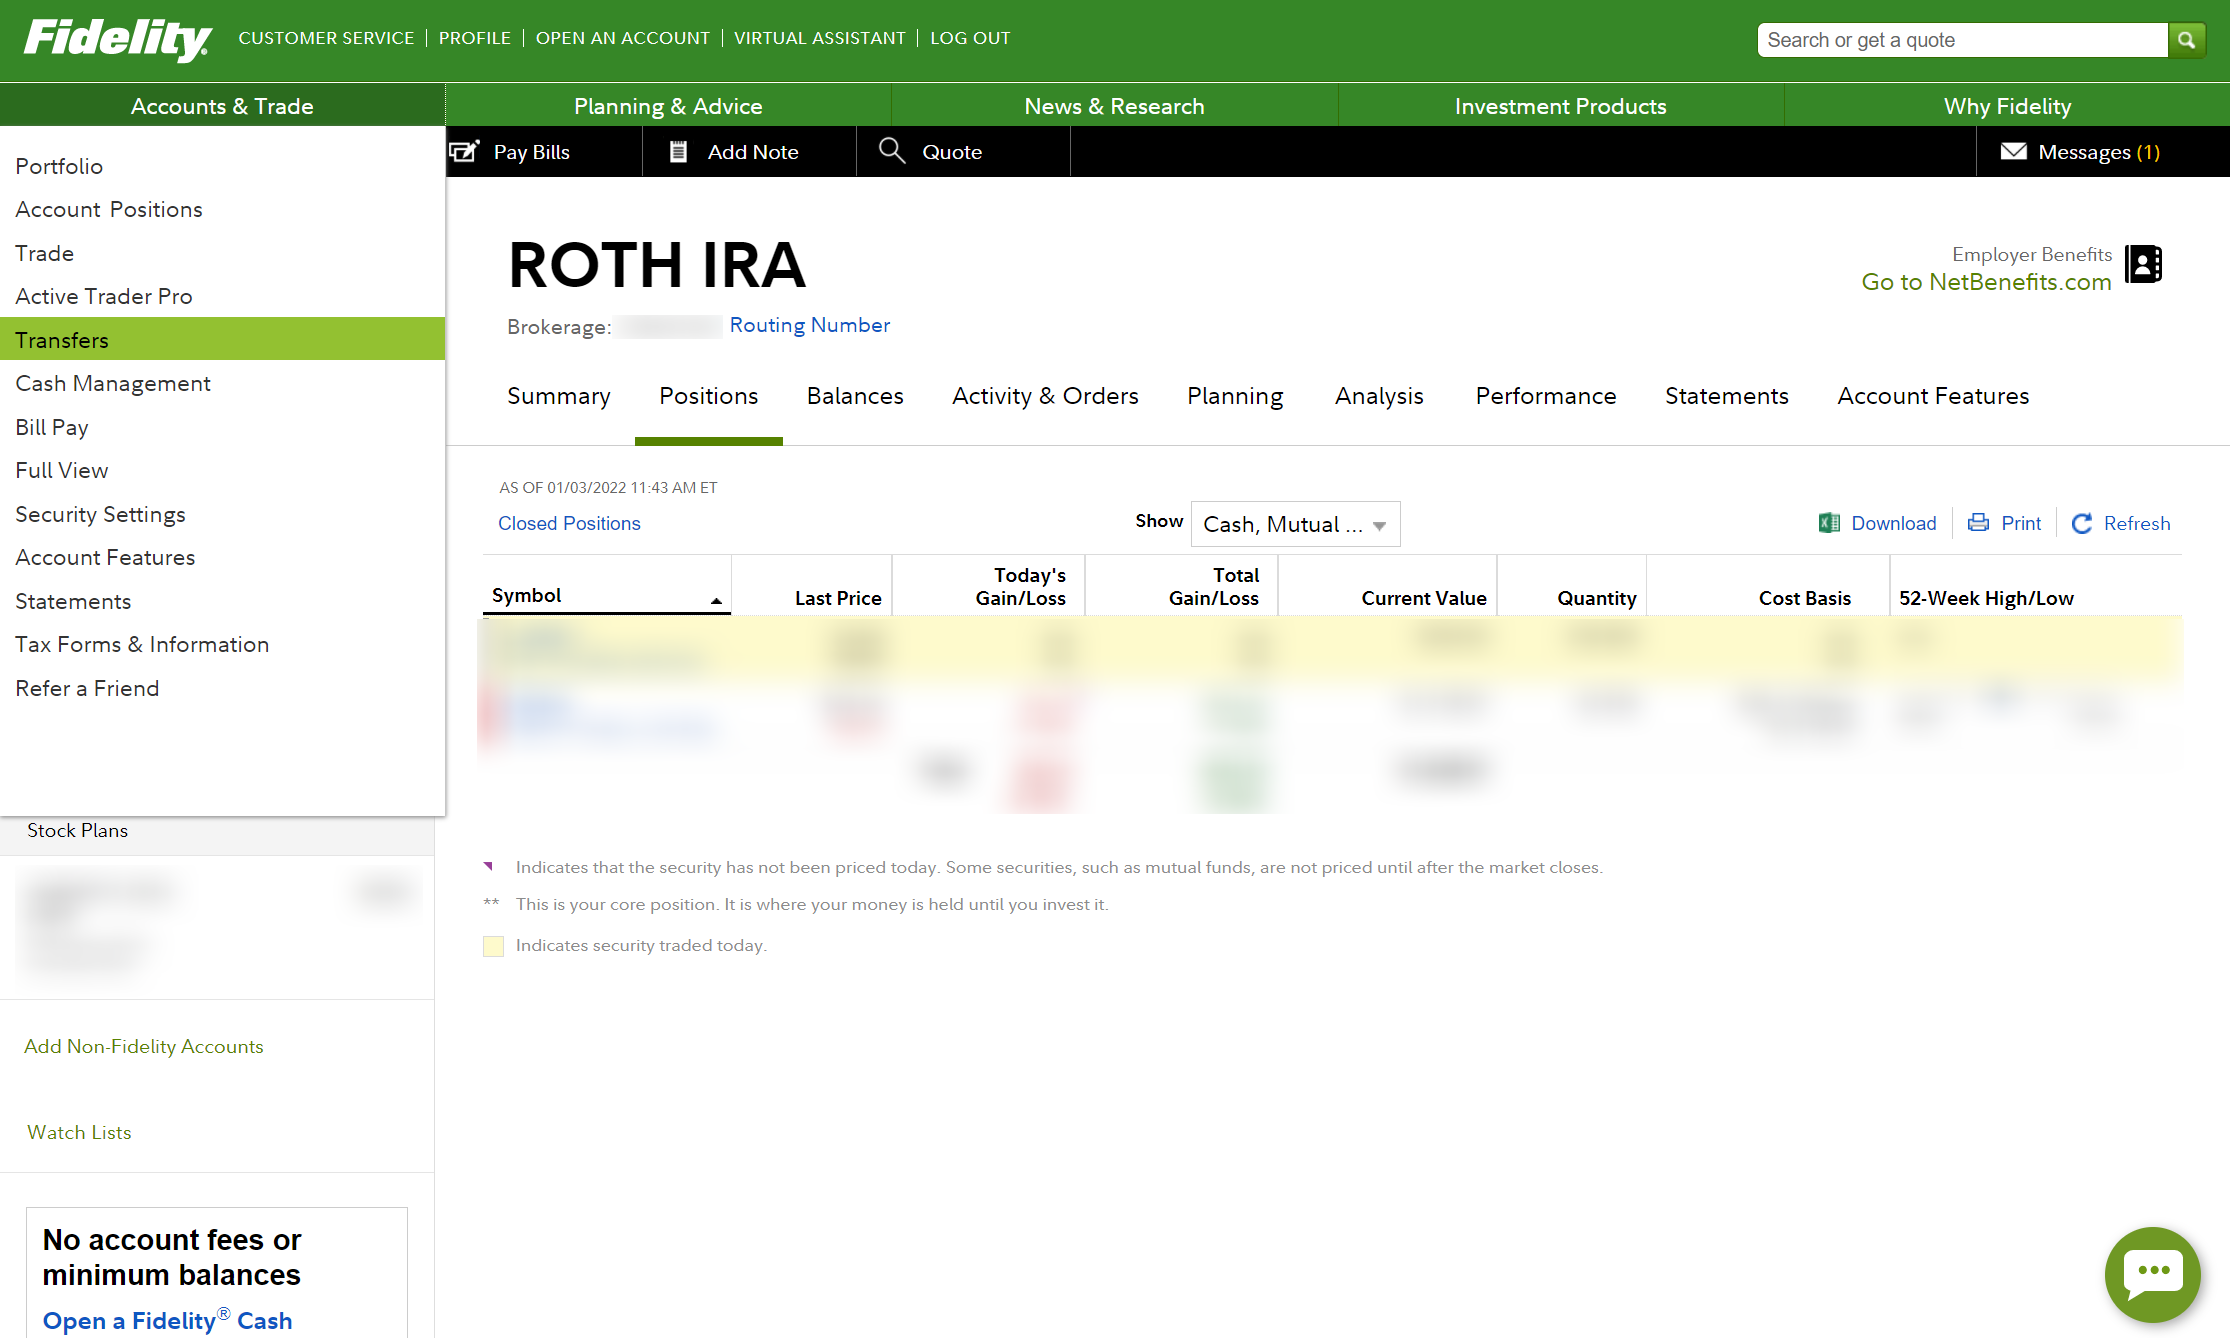 Fidelity Roth IRA: Transfers